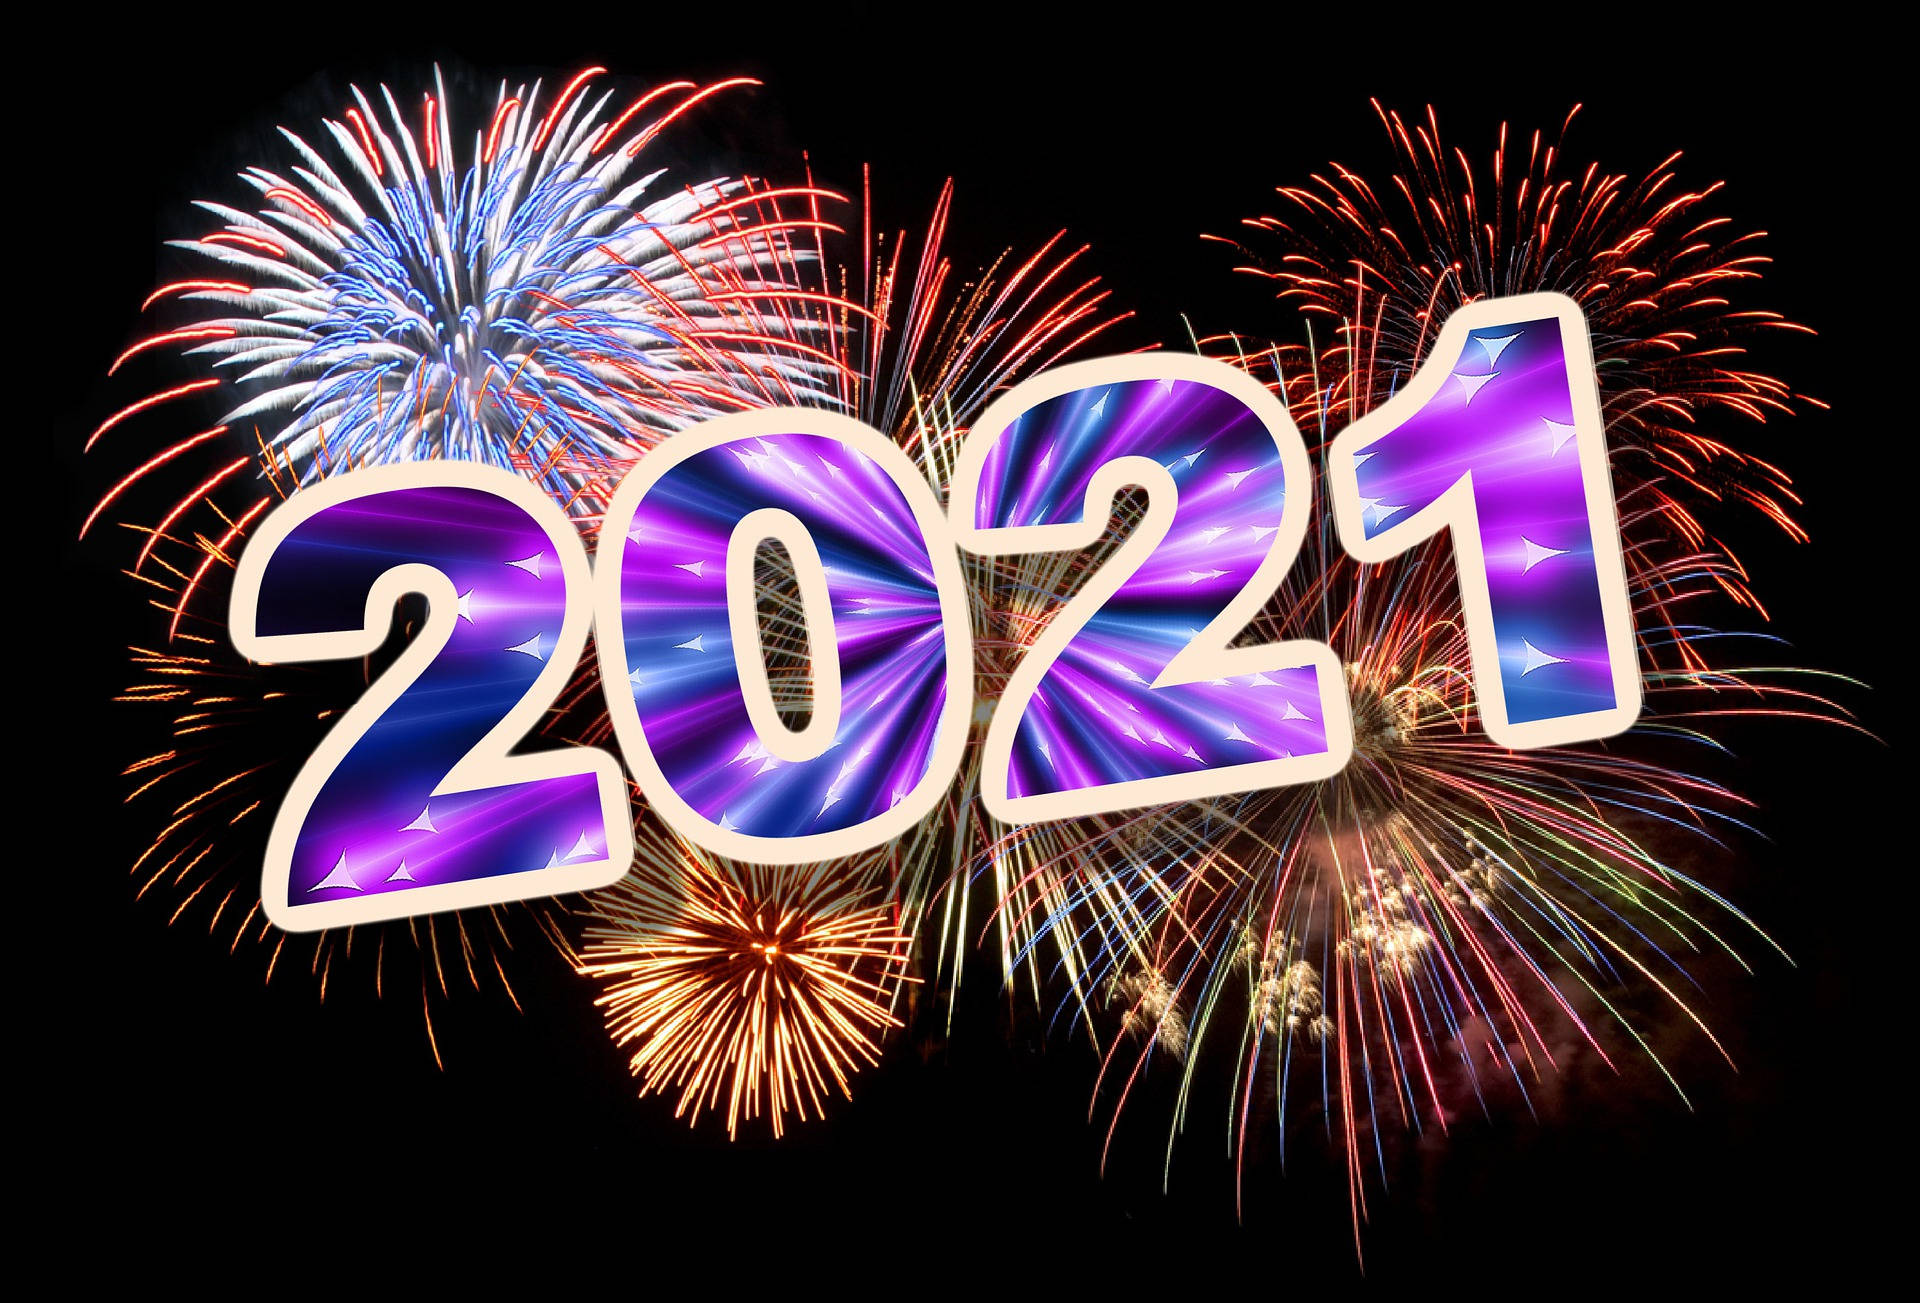 Fireworks 2021 Desktop Wallpaper